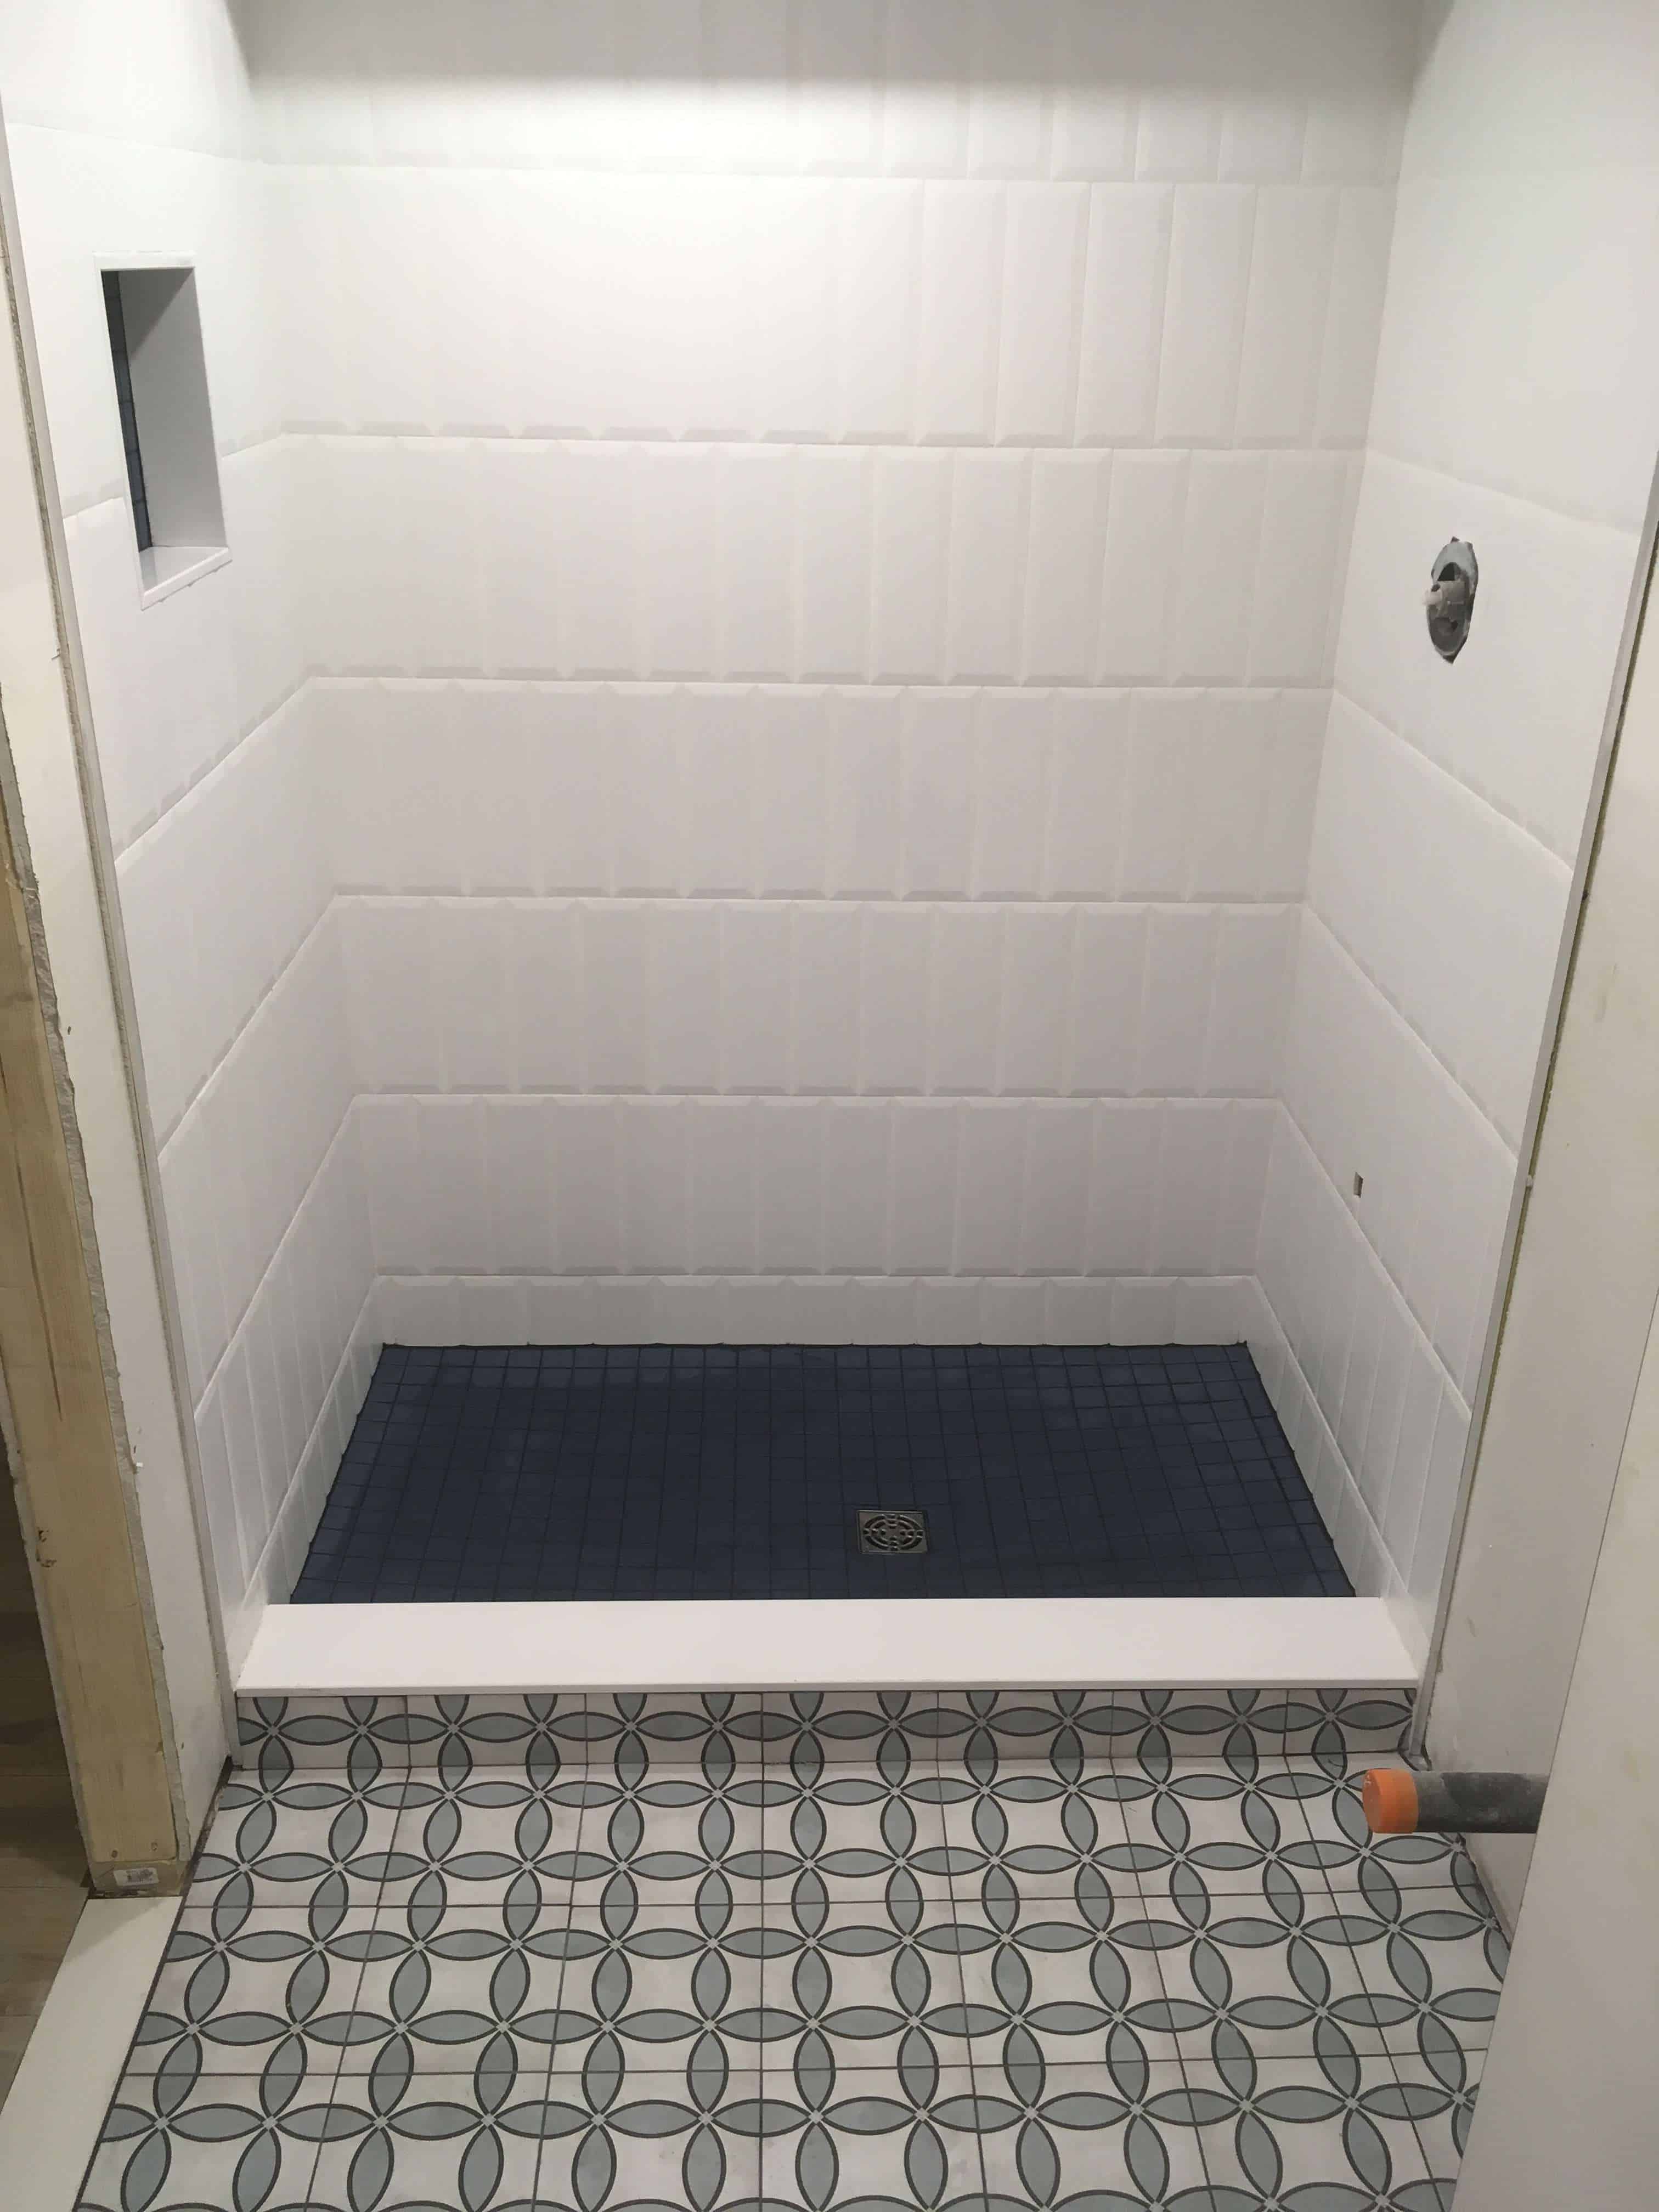 Tiled bathroom floor - gorportland